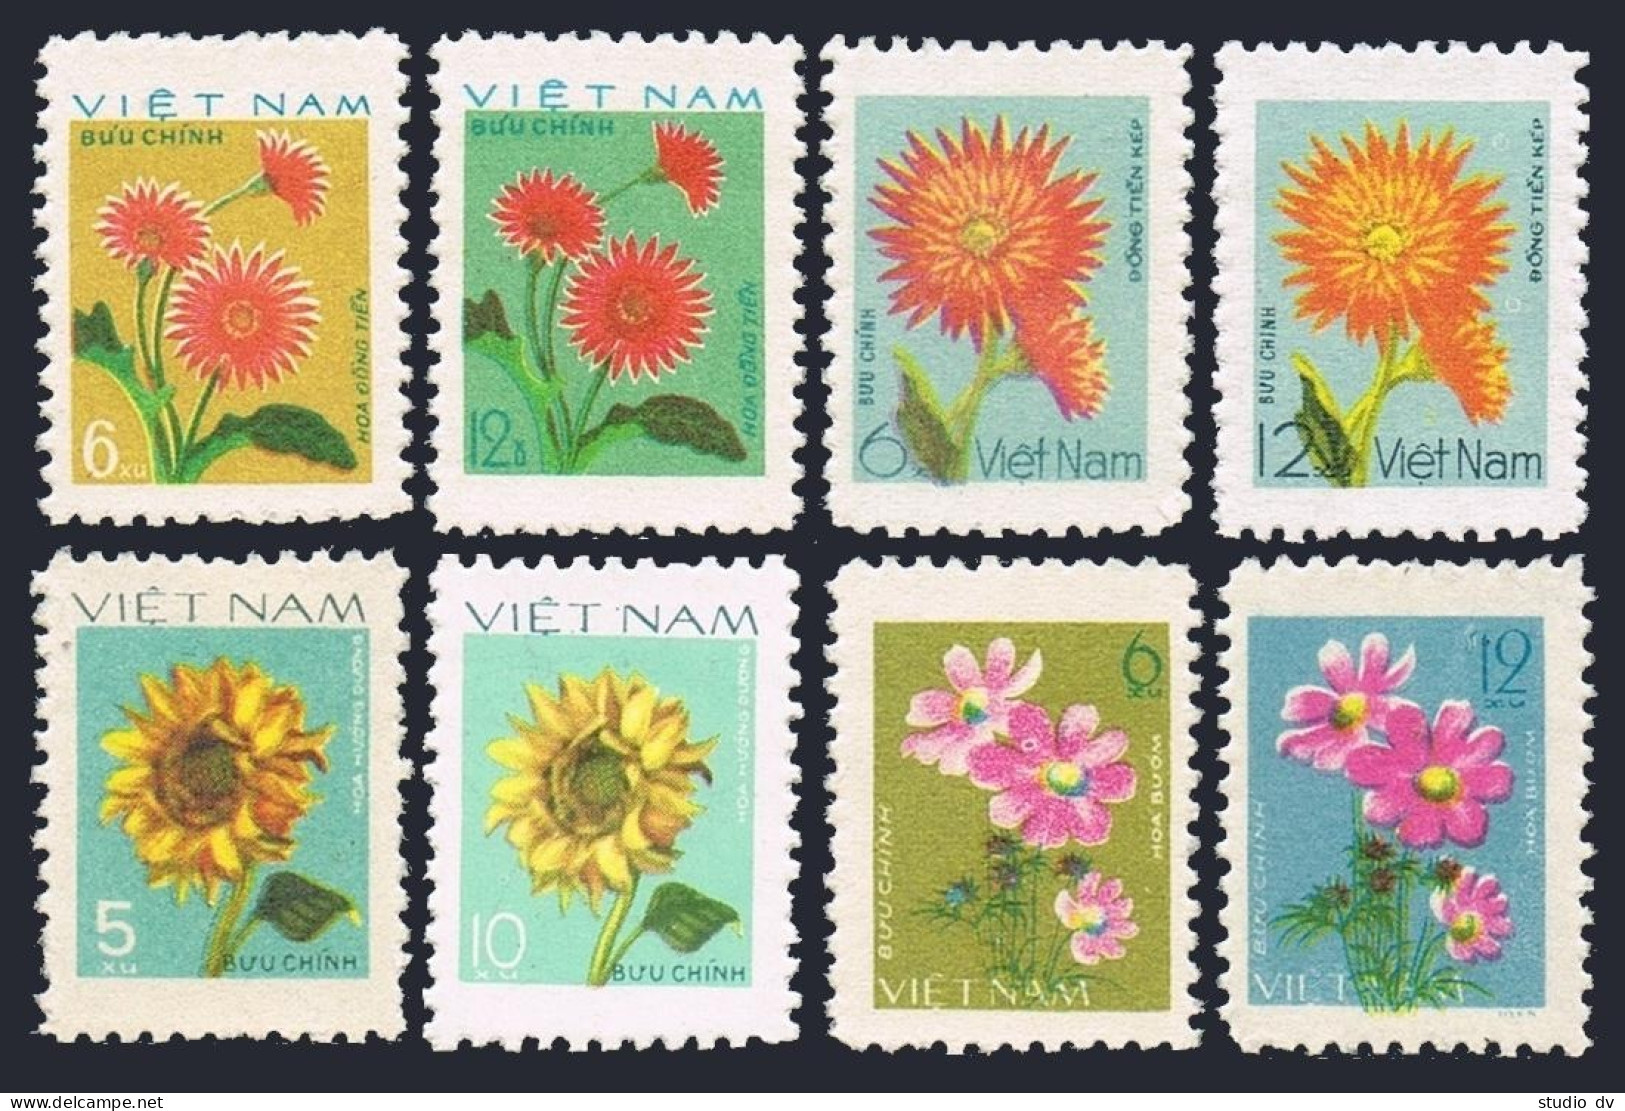 Viet Nam 892-895,921-924,MNH. Flowers 1977-1978.Pink,Orange,Sunflower,Pansy. - Viêt-Nam